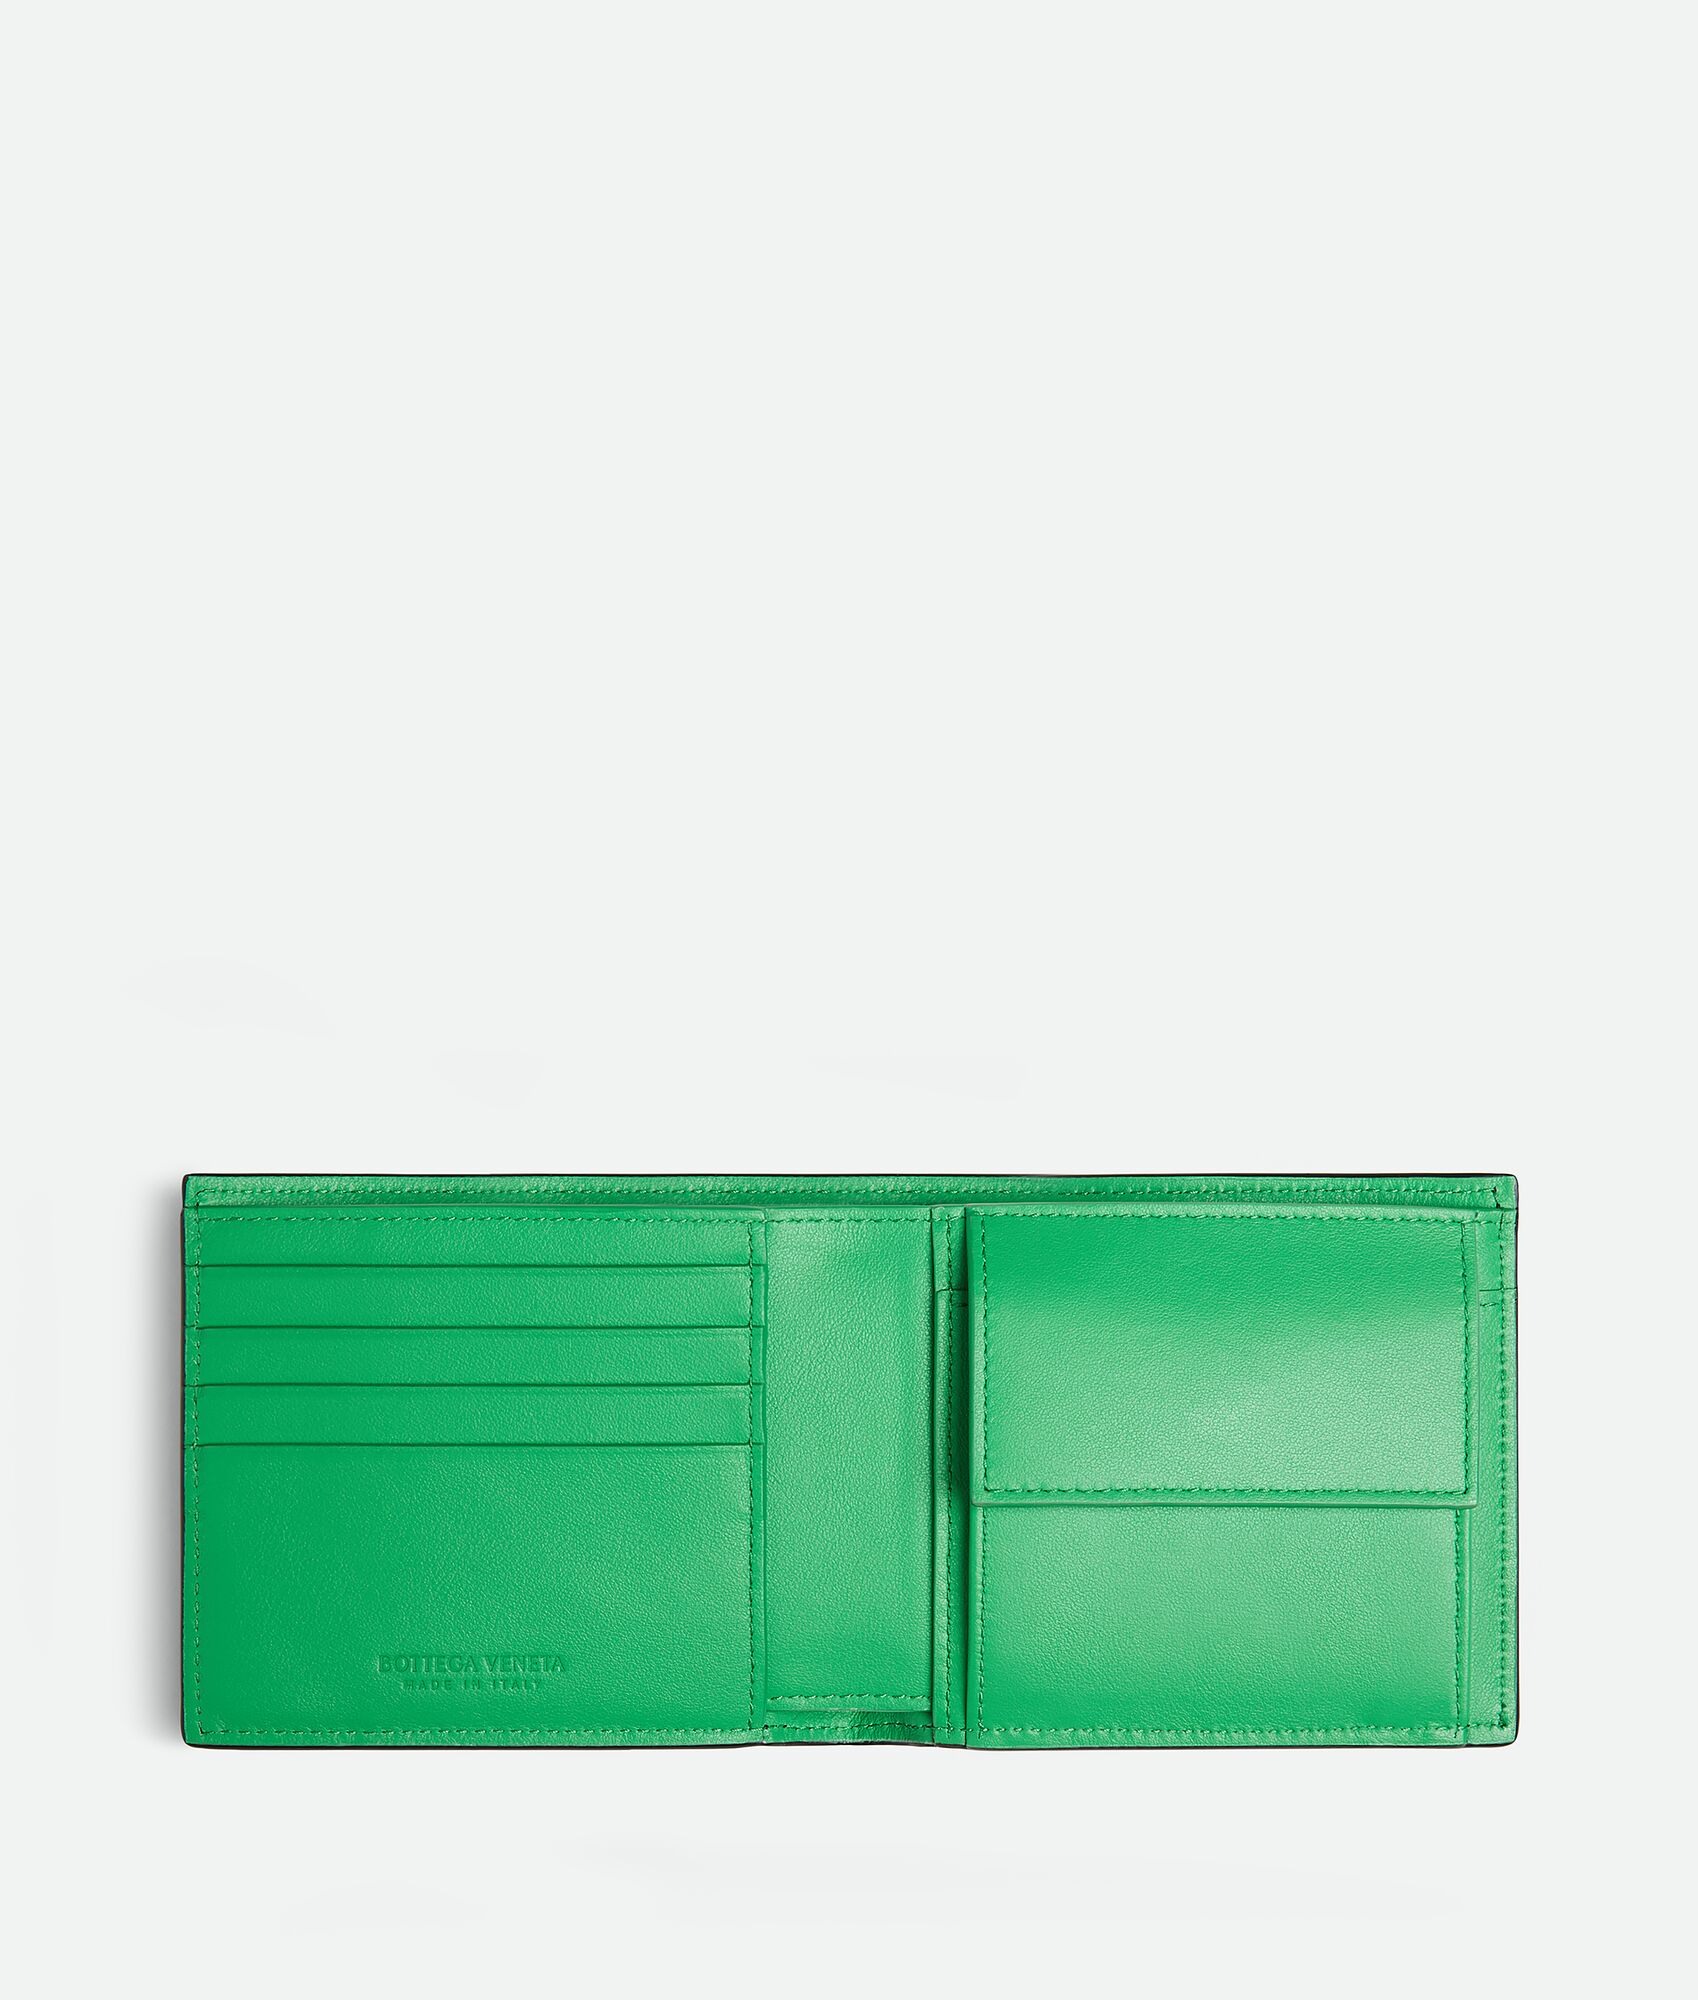 Bottega Veneta® Men's Intrecciato Bill Clip Wallet in Nero. Shop online now.